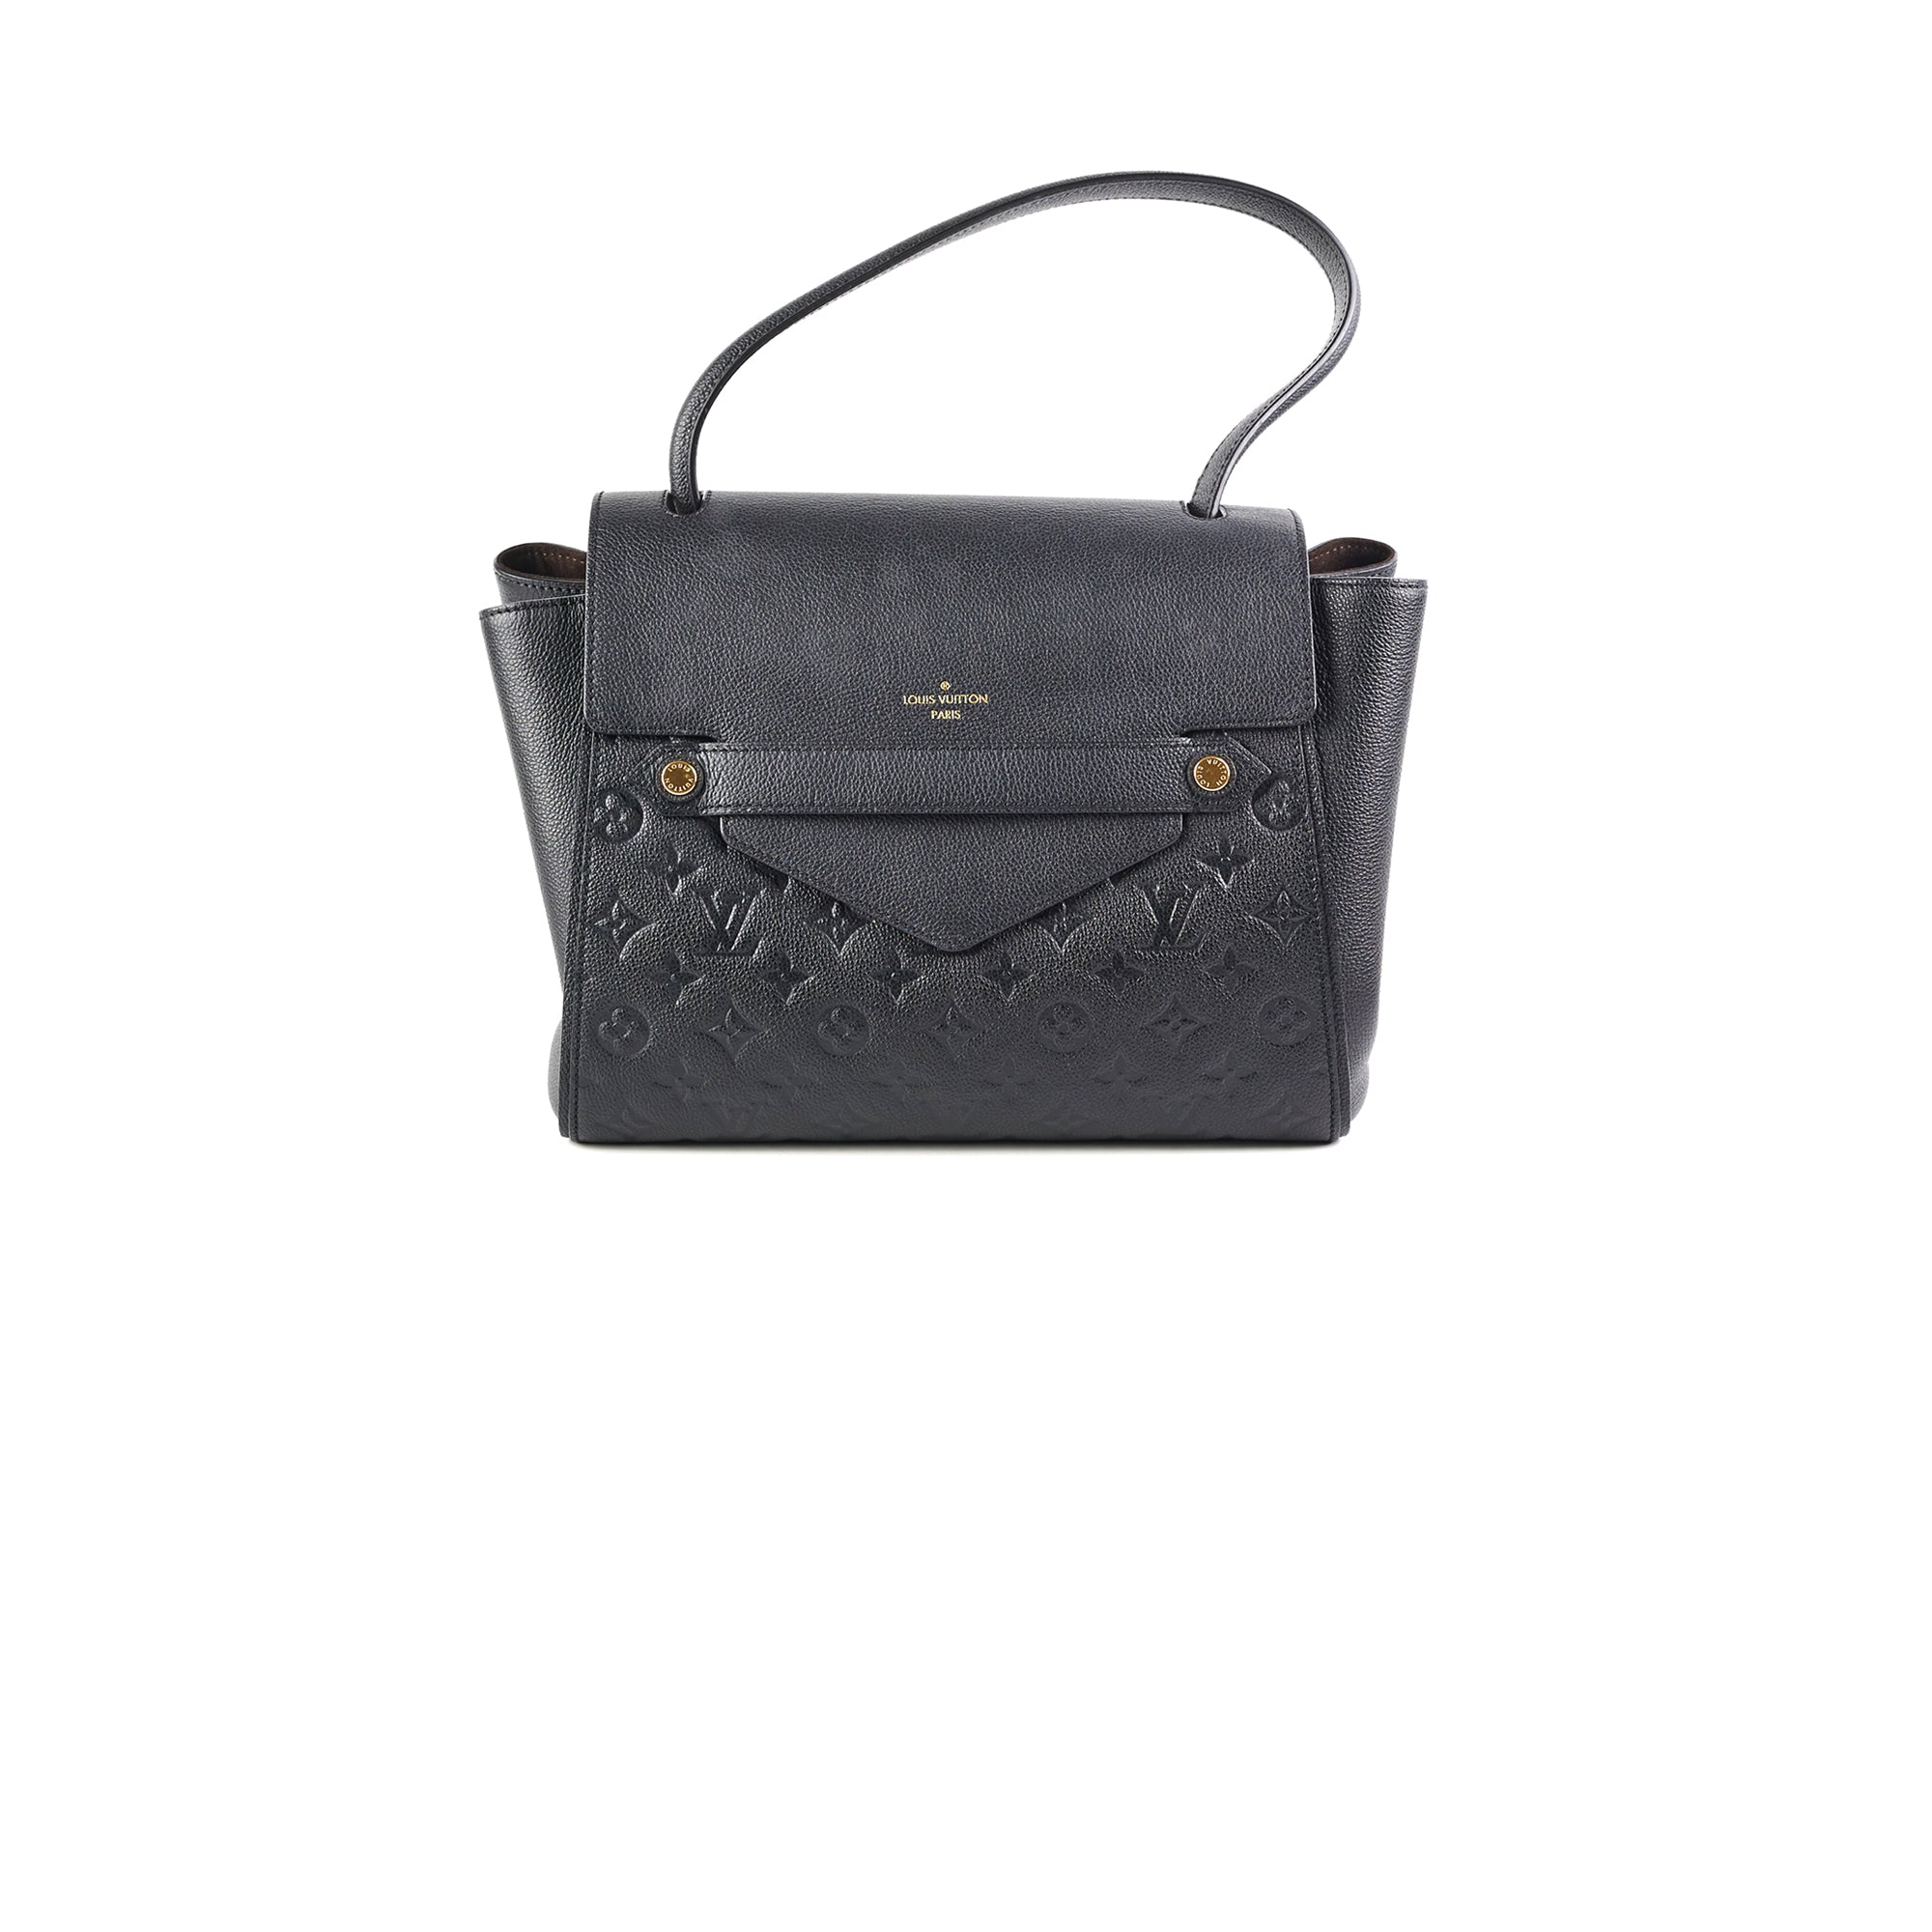 Louis Vuitton Black Monogram Empreinte Leather Trocadero Bag Louis Vuitton